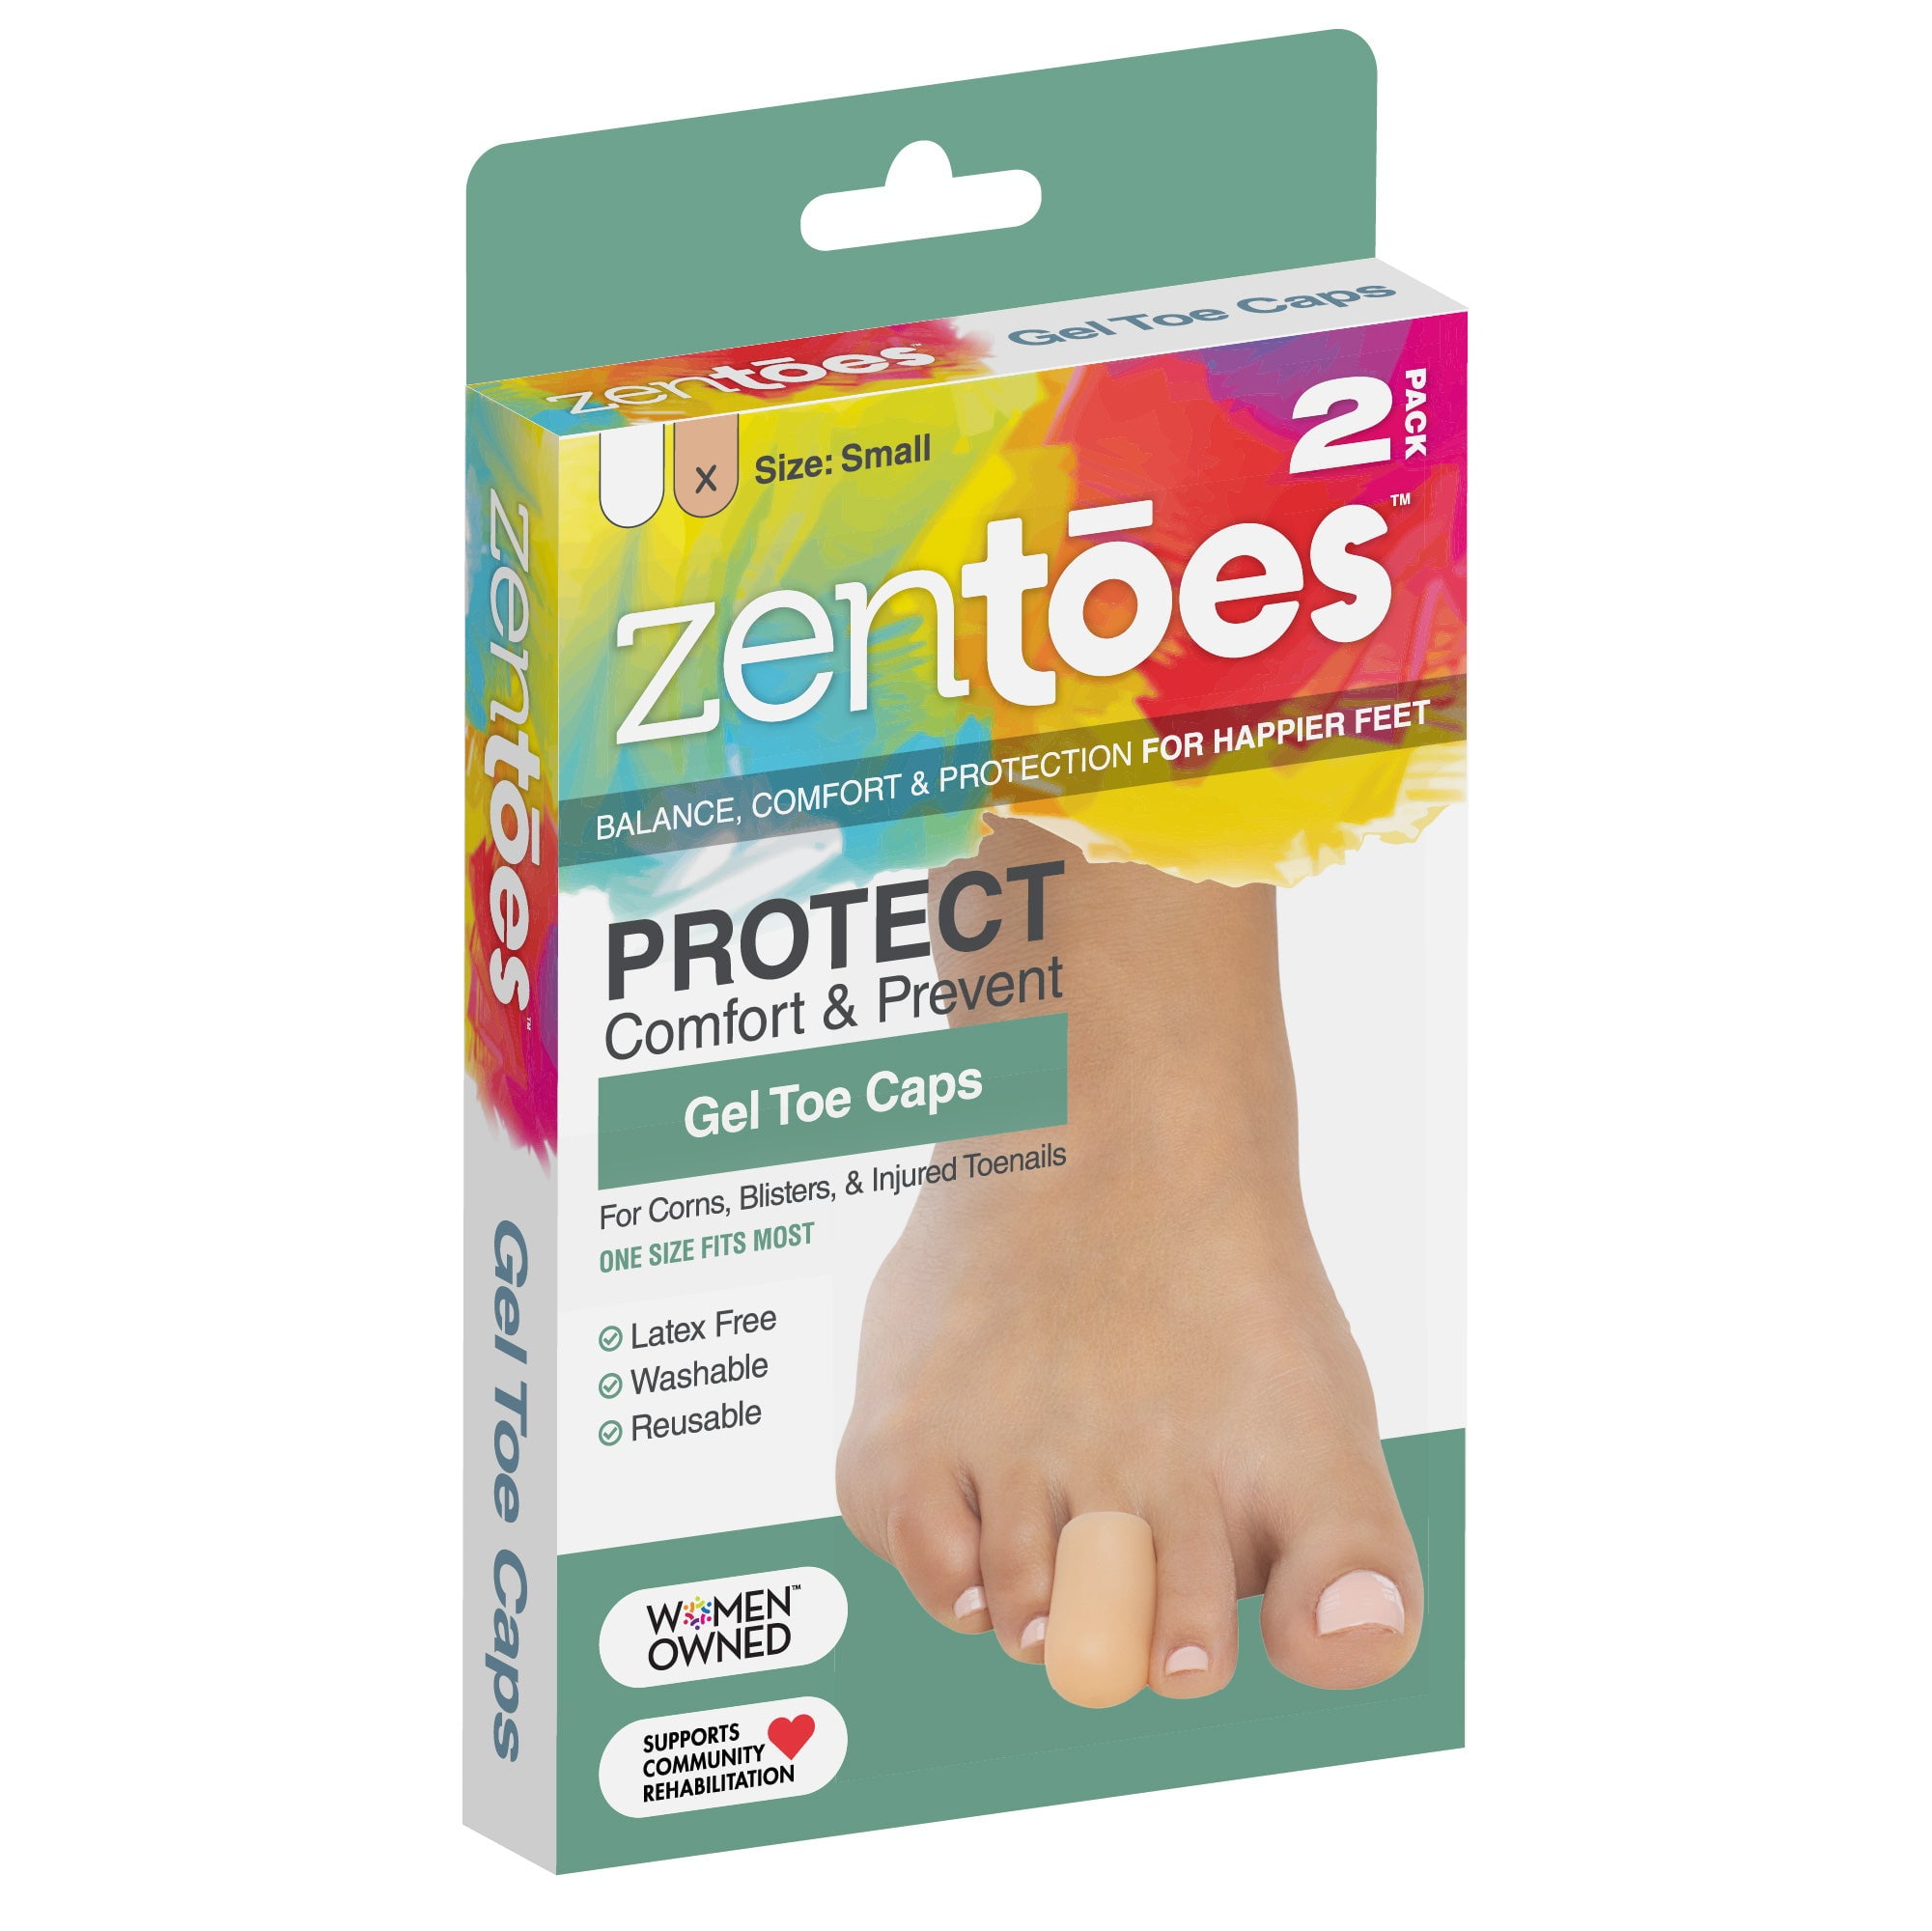 ZenToes Small Gel Toe Caps, 2 Pack, Beige - For Corns, Blisters & Toenails